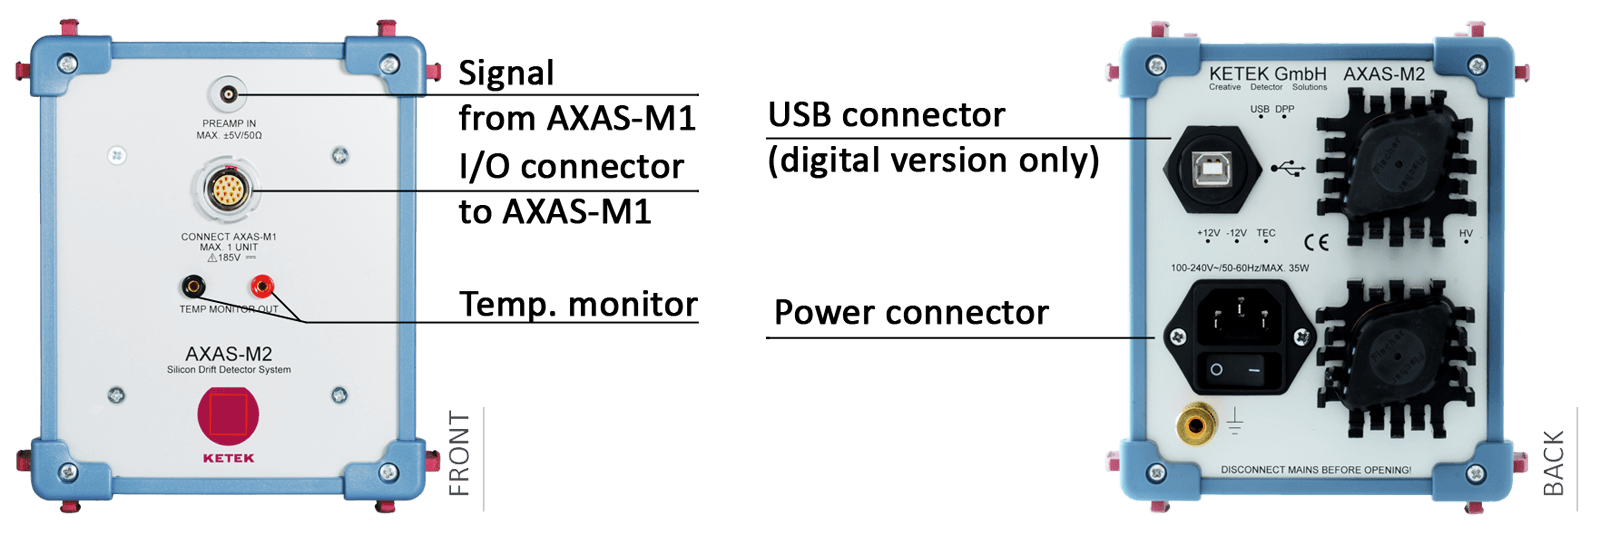 AXAS-M2 connectors